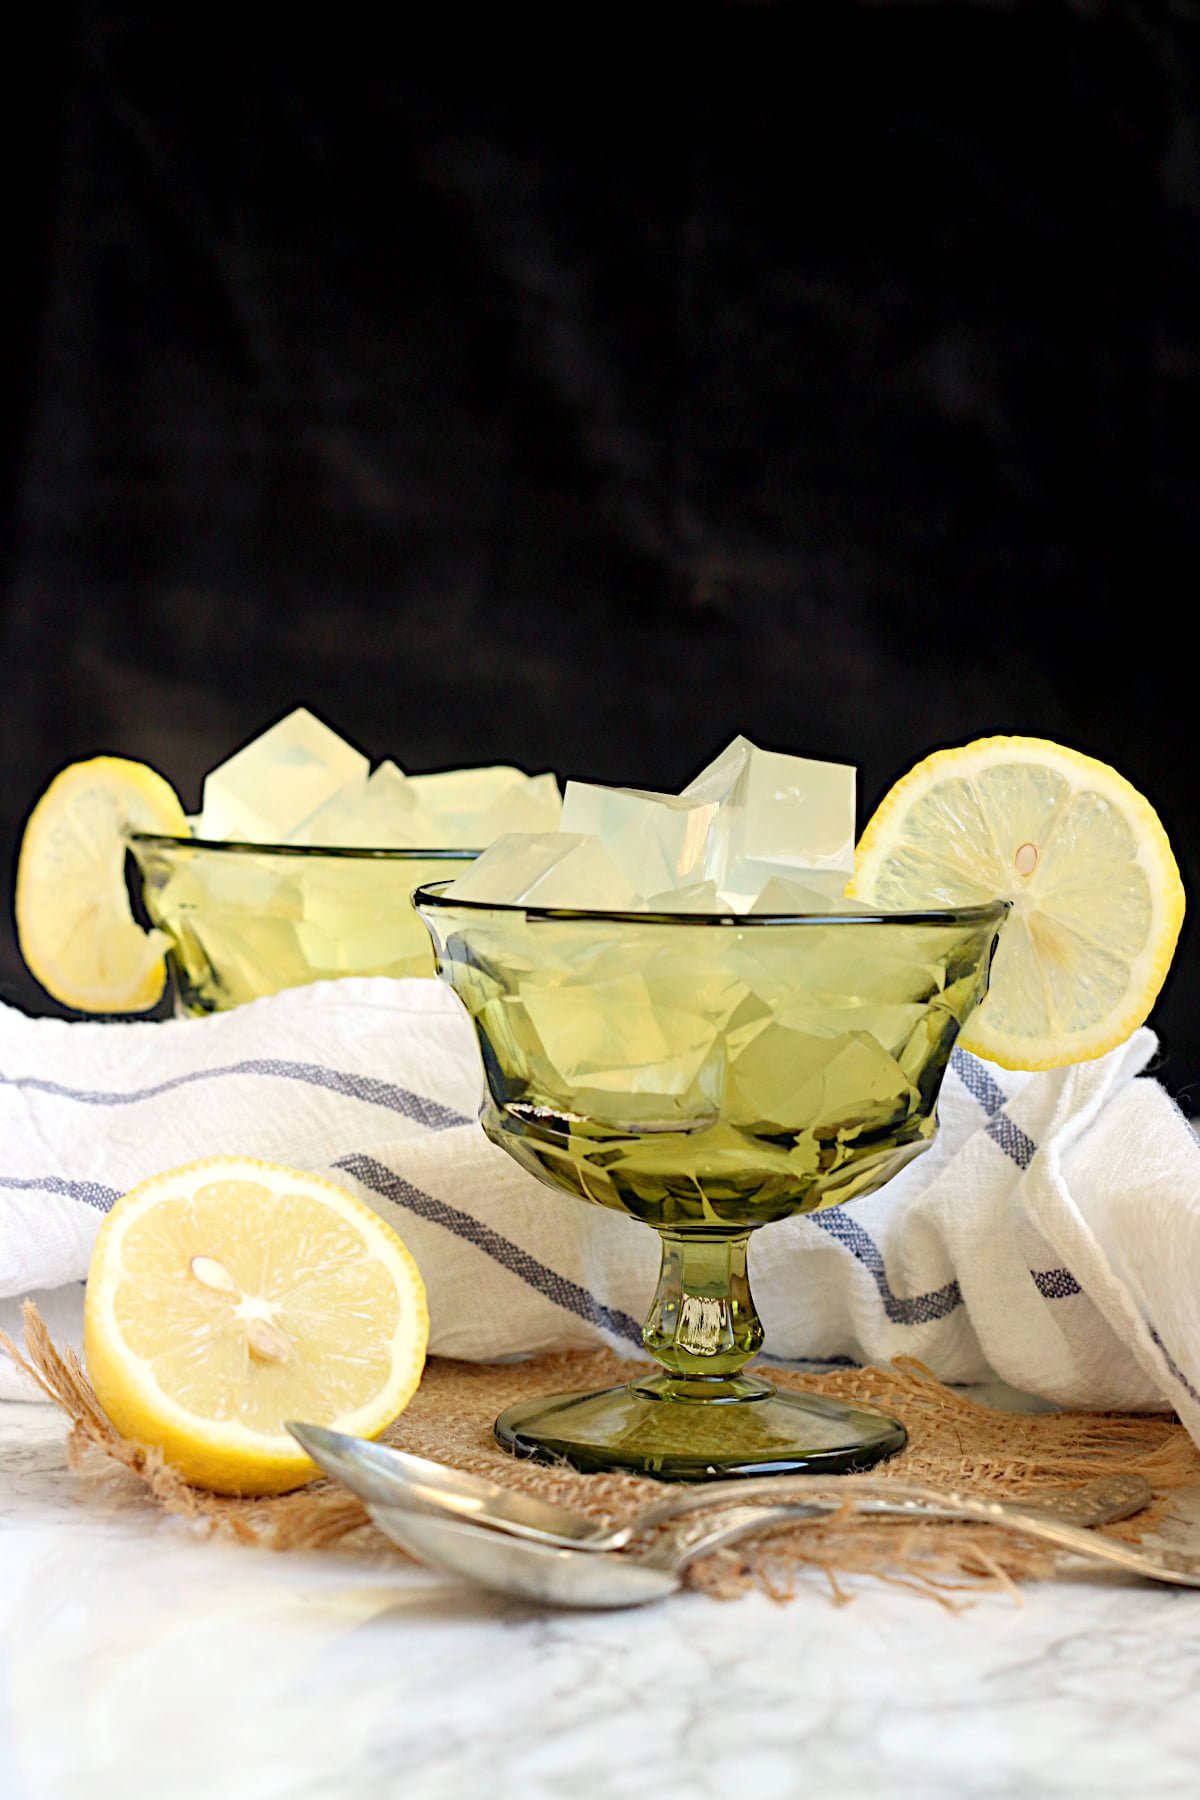 DIY Lemon Jello cut into cubes in a green dessert goblet.